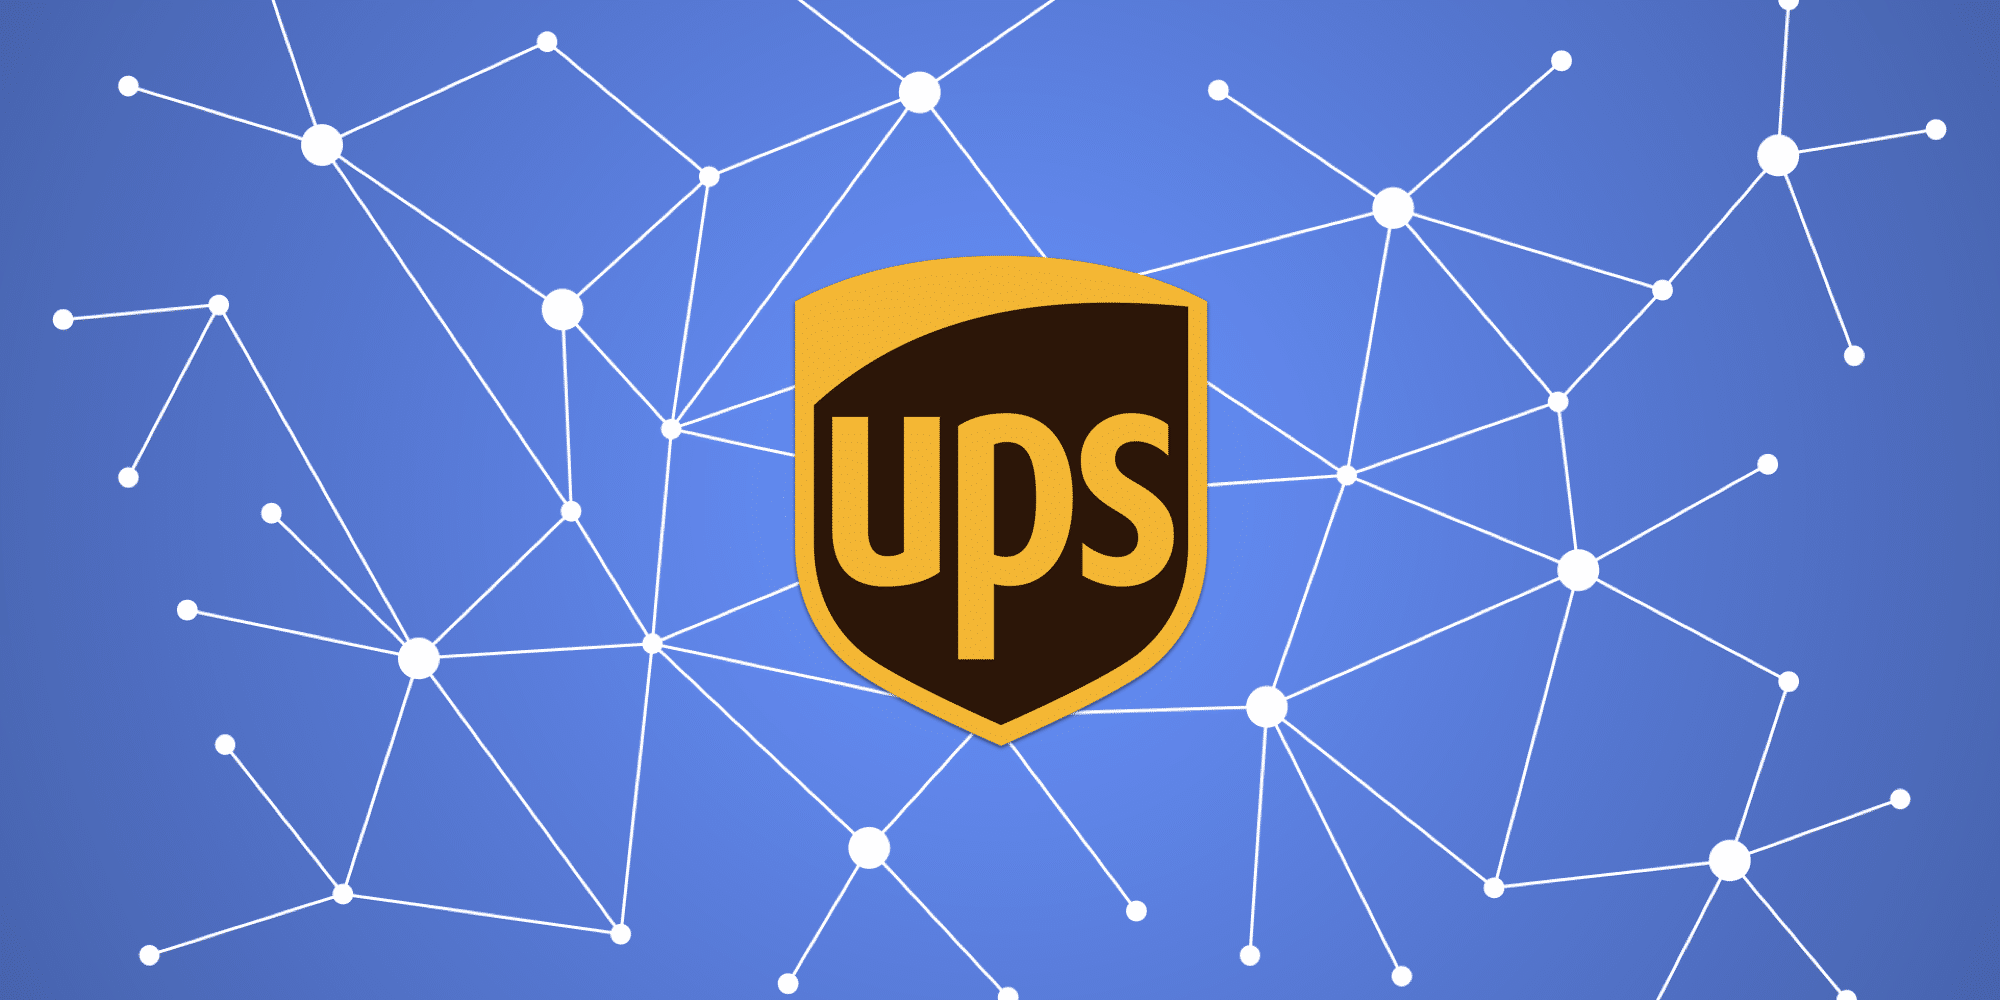 UPS Blue Logo - A Look into the UPS Blockchain